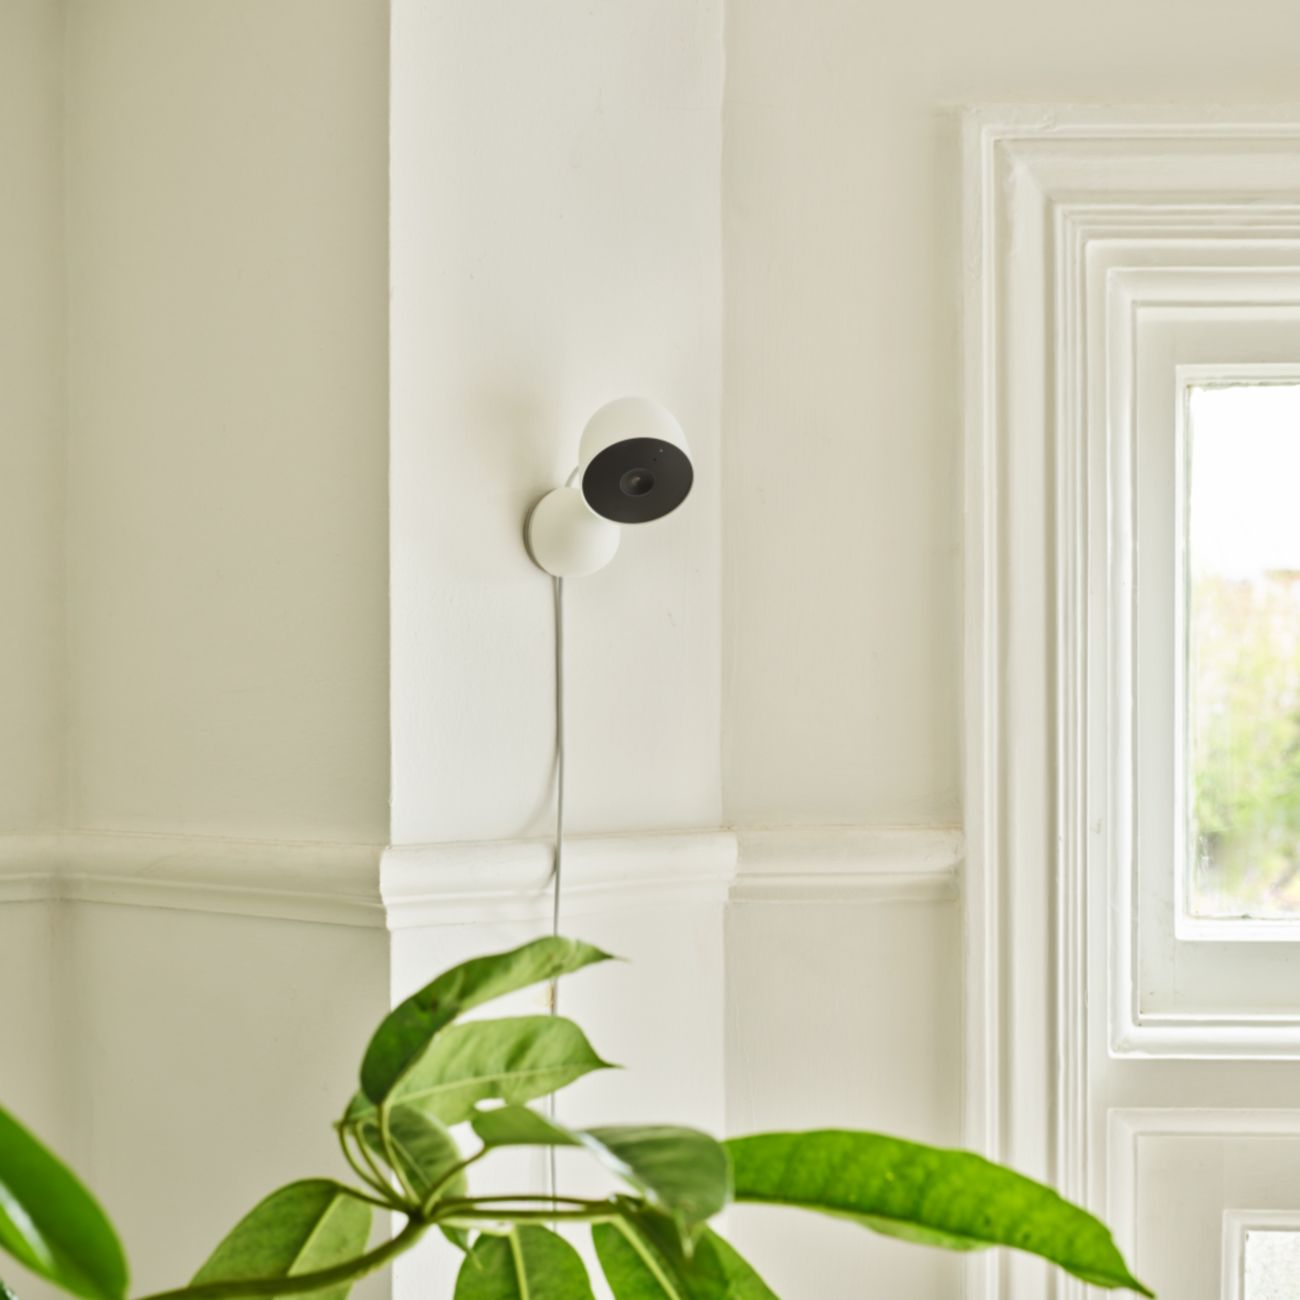 Google Nest Wired Indoor Tilt adjustable Smart camera in White